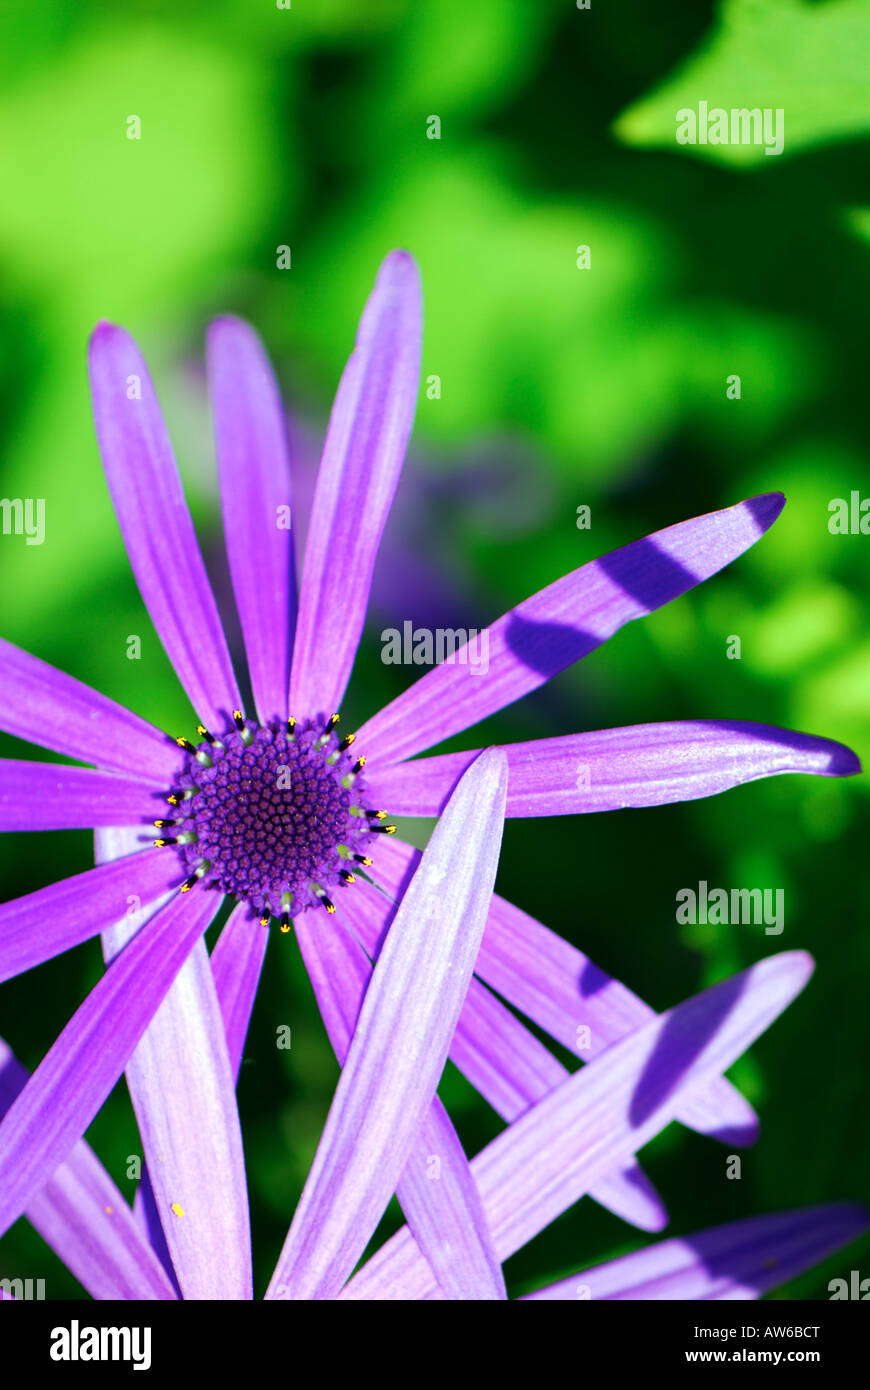 Blue/purple daisy-like flower, from the Aster family, called Brachyglottis Hectoris Stock Photo